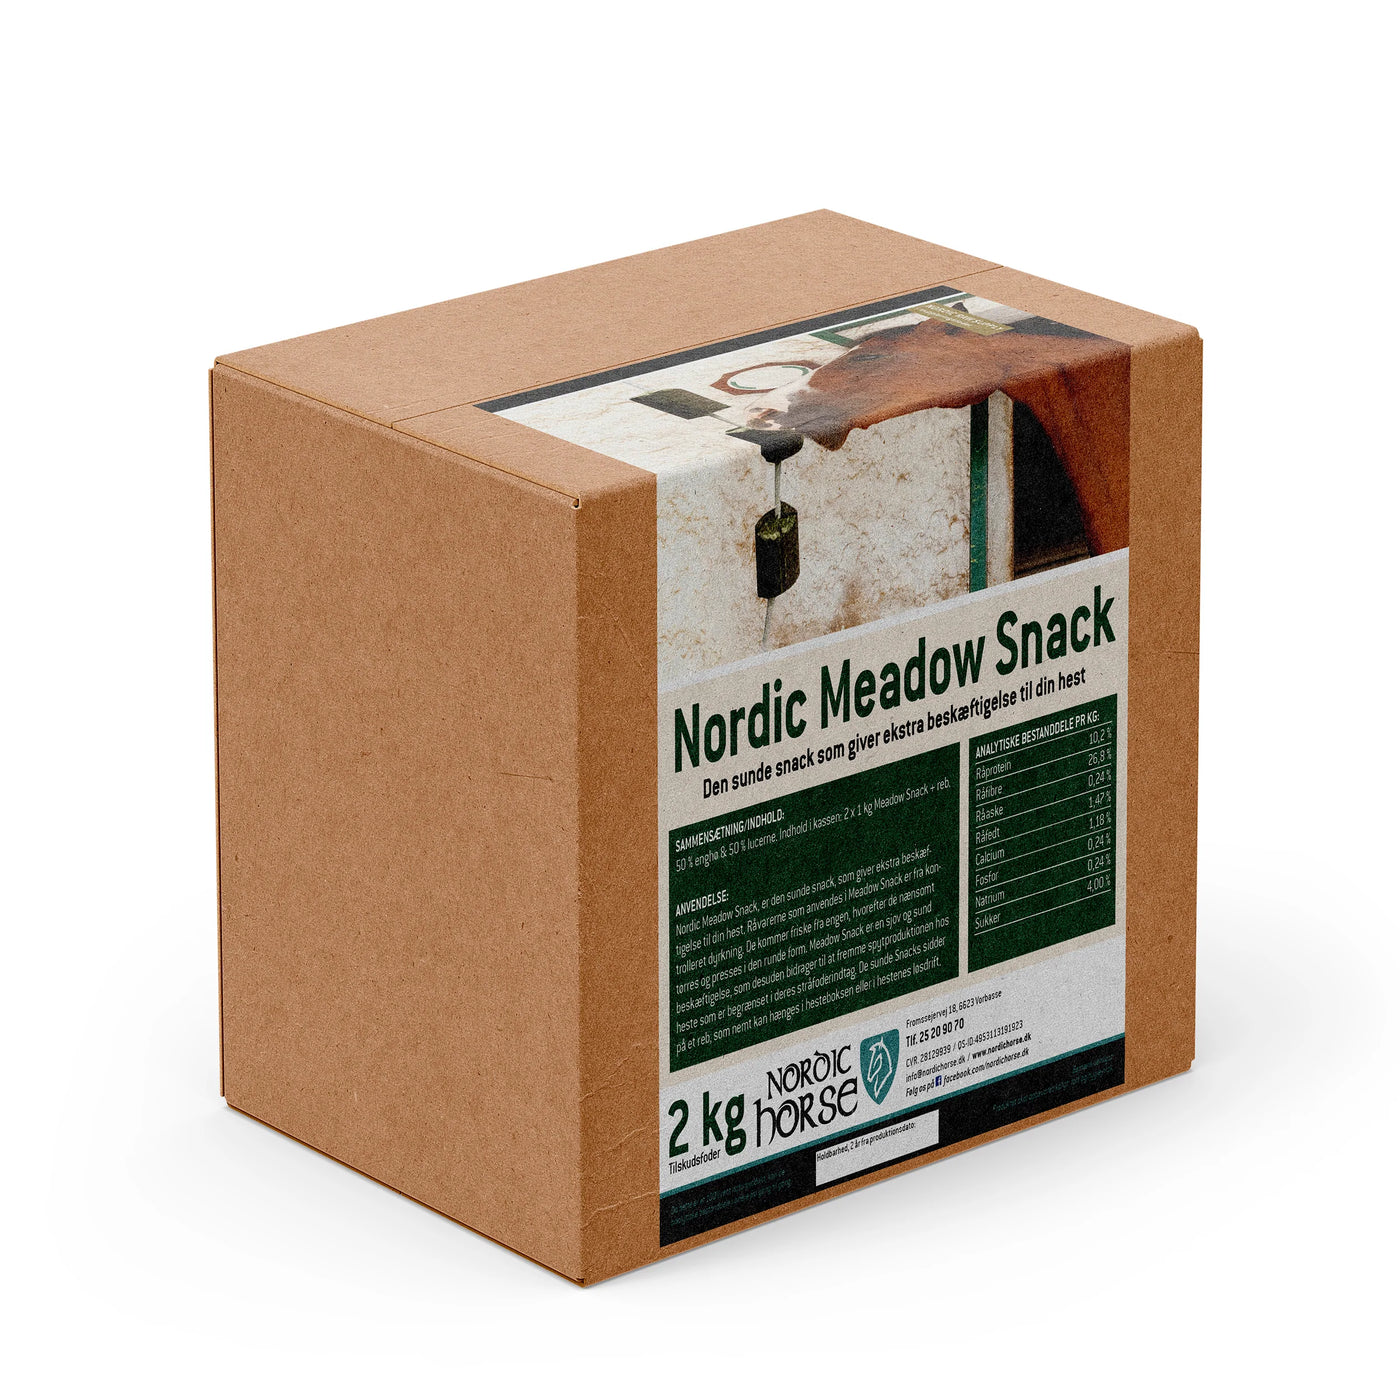 Nordic Meadow Snacks